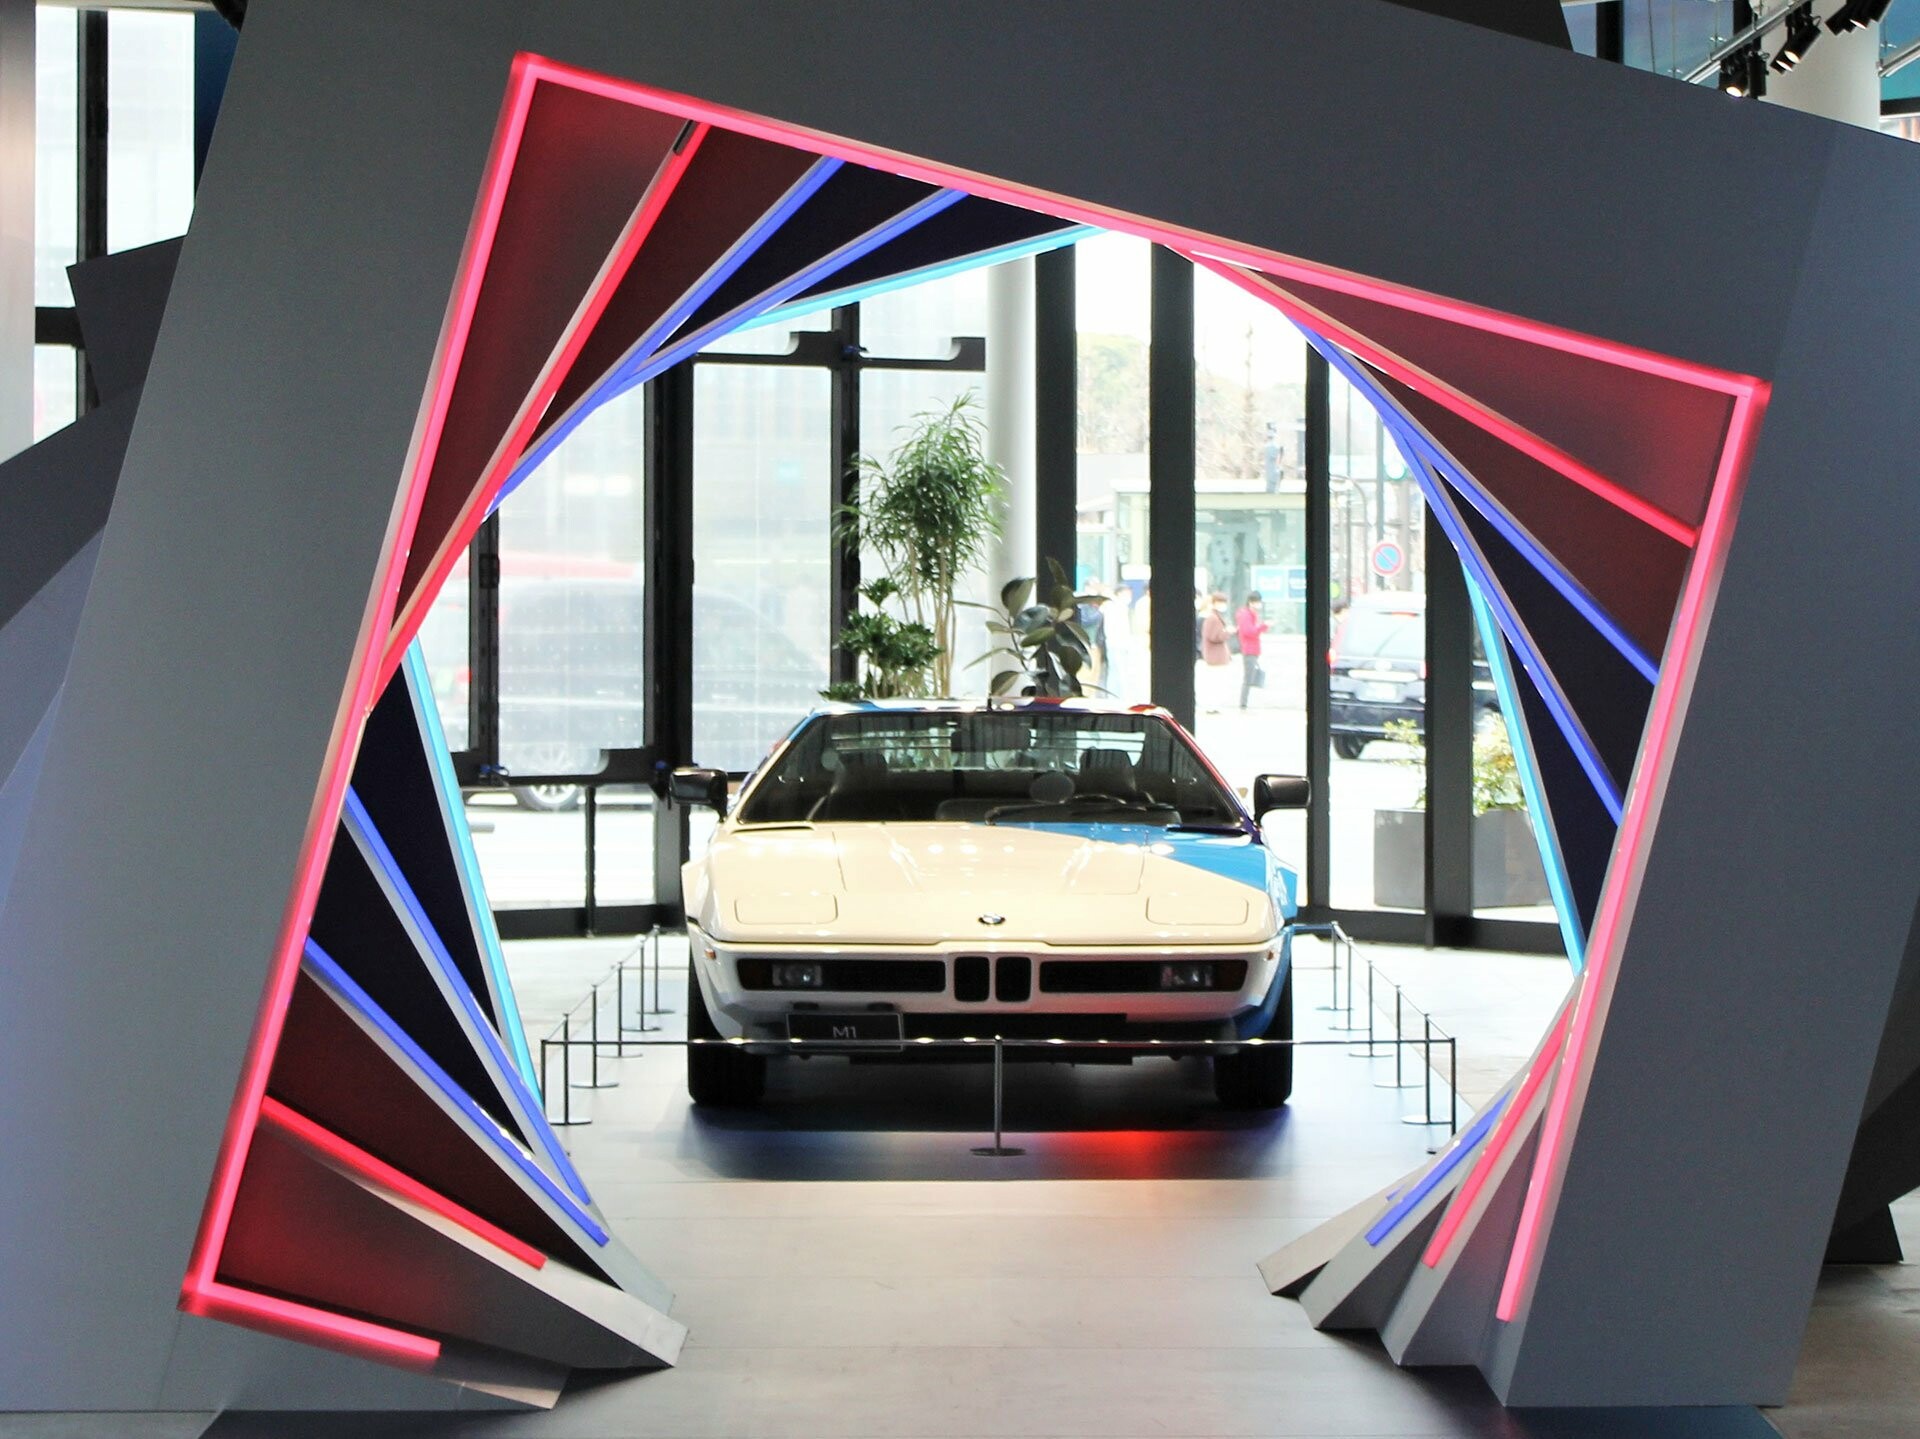 BMWの無料イベントで体感した、新時代のラグジュアリーブランドの魅力。